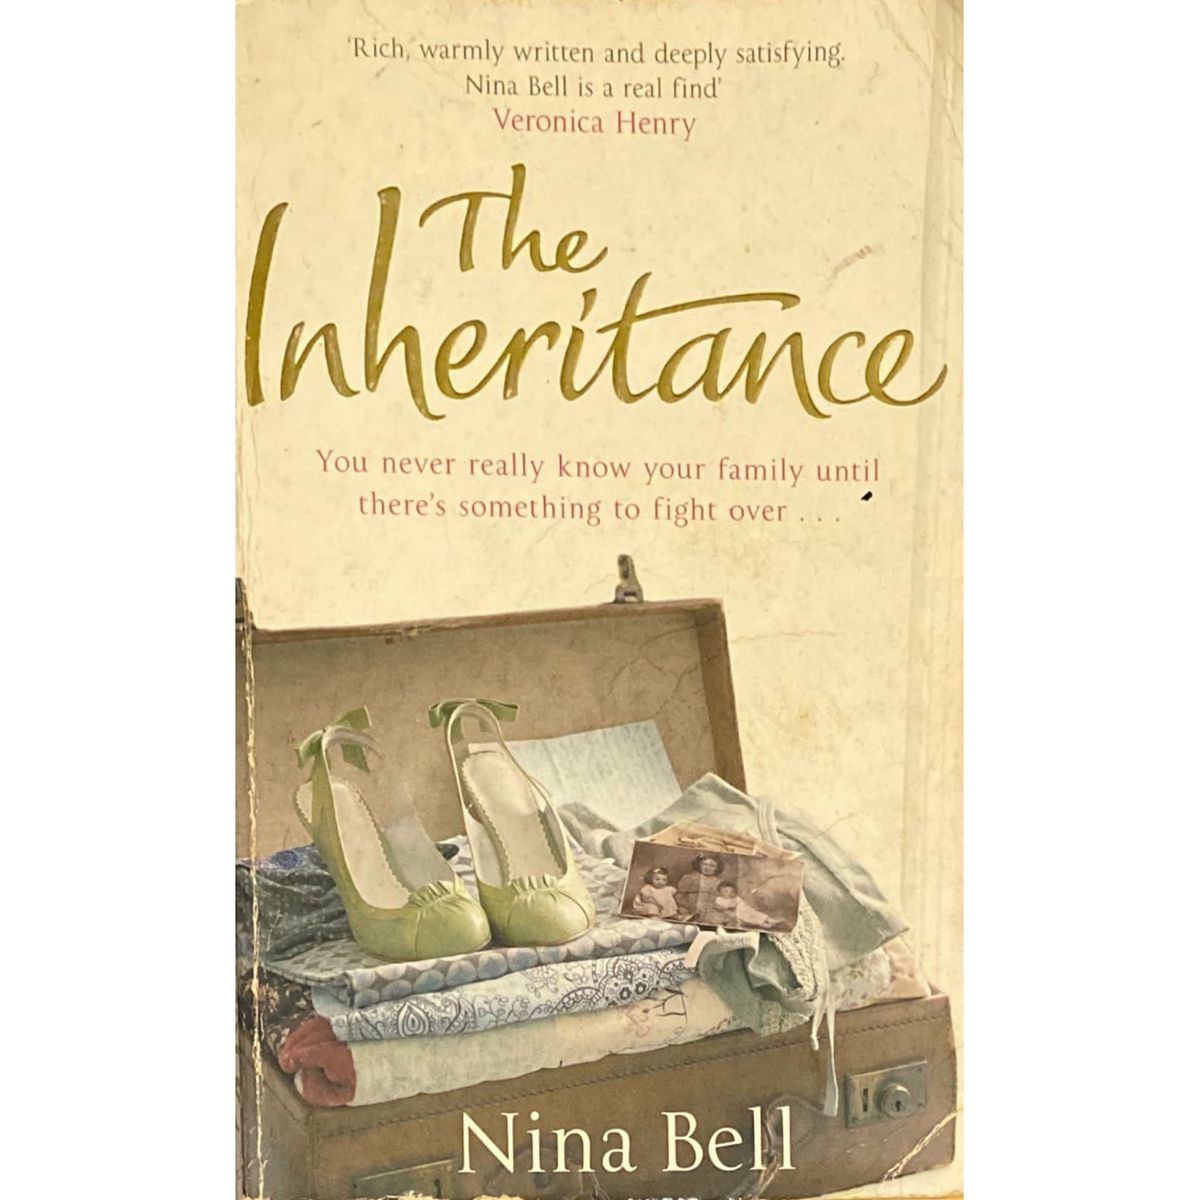 ISBN: 9780751539059 / 0751539058 - The Inheritance by Nina Bell [2008]